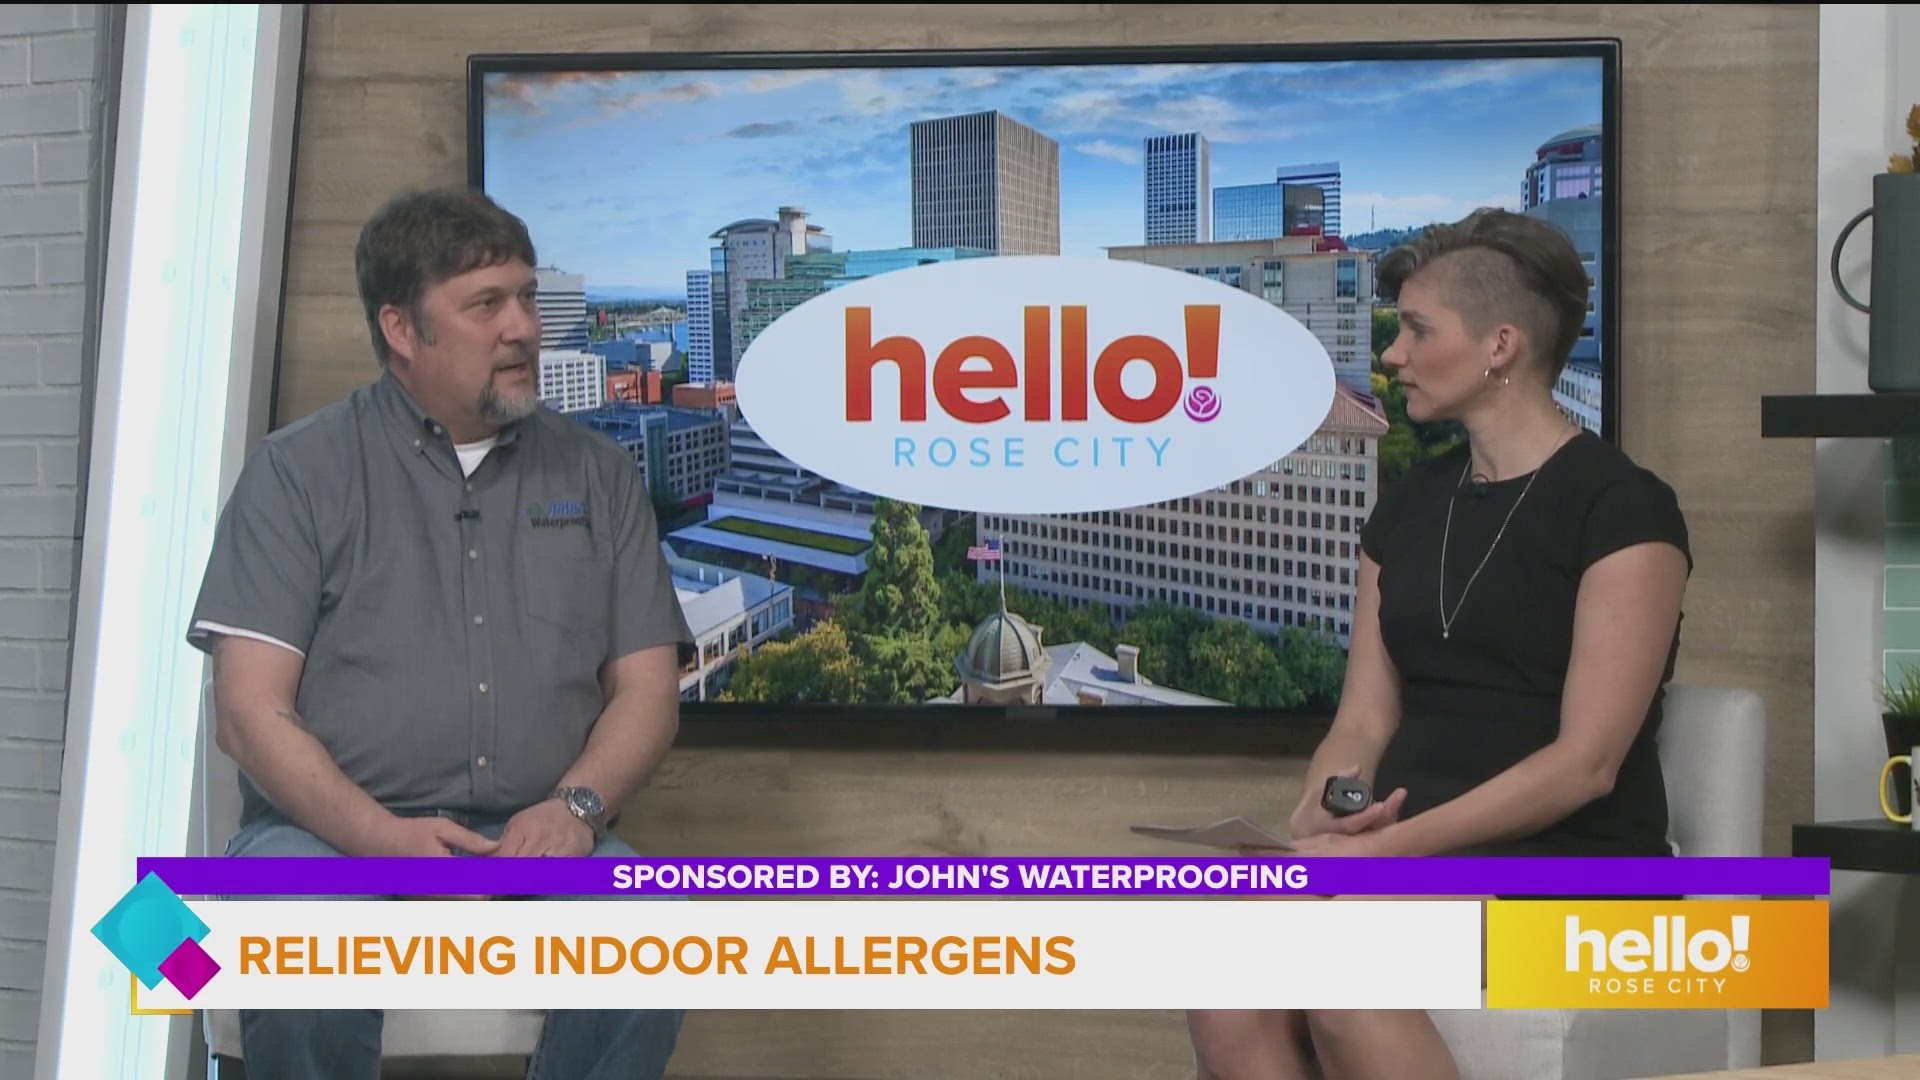 This segment is sponsored by John's Waterproofing